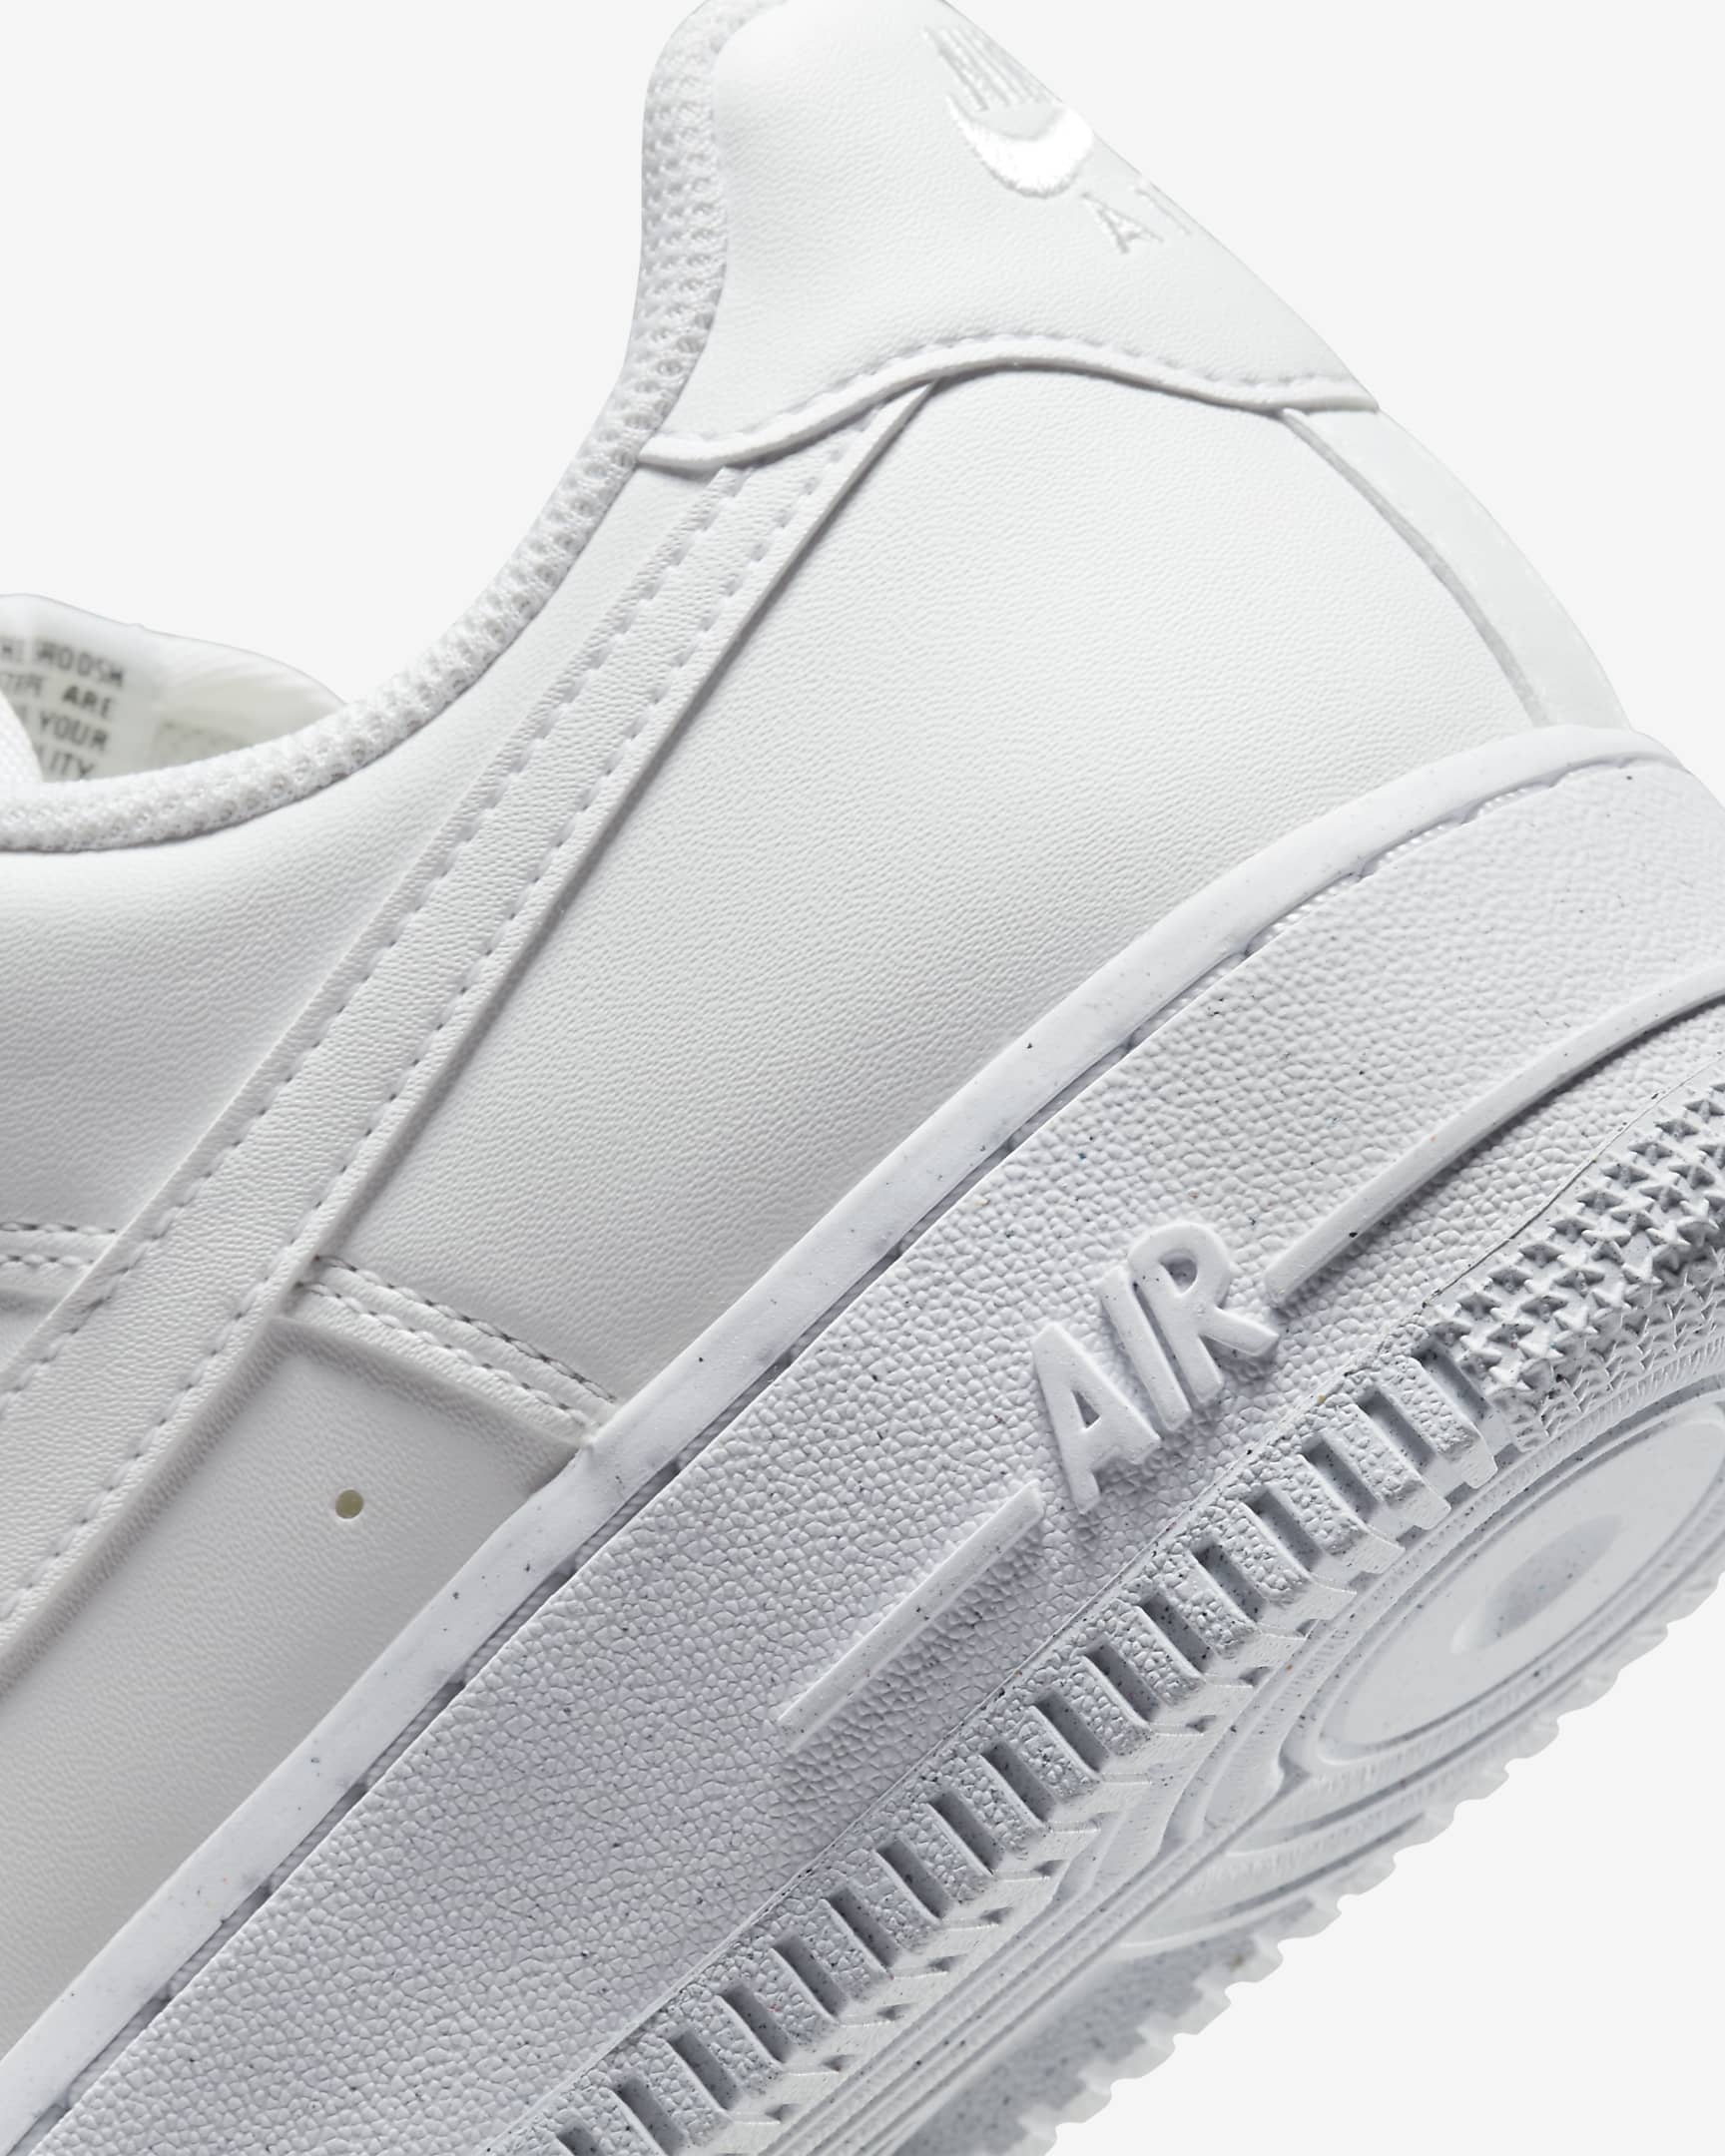 Chaussures Nike Air Force 1 '07 Next Nature pour Femme - Blanc/Noir/Metallic Silver/Blanc